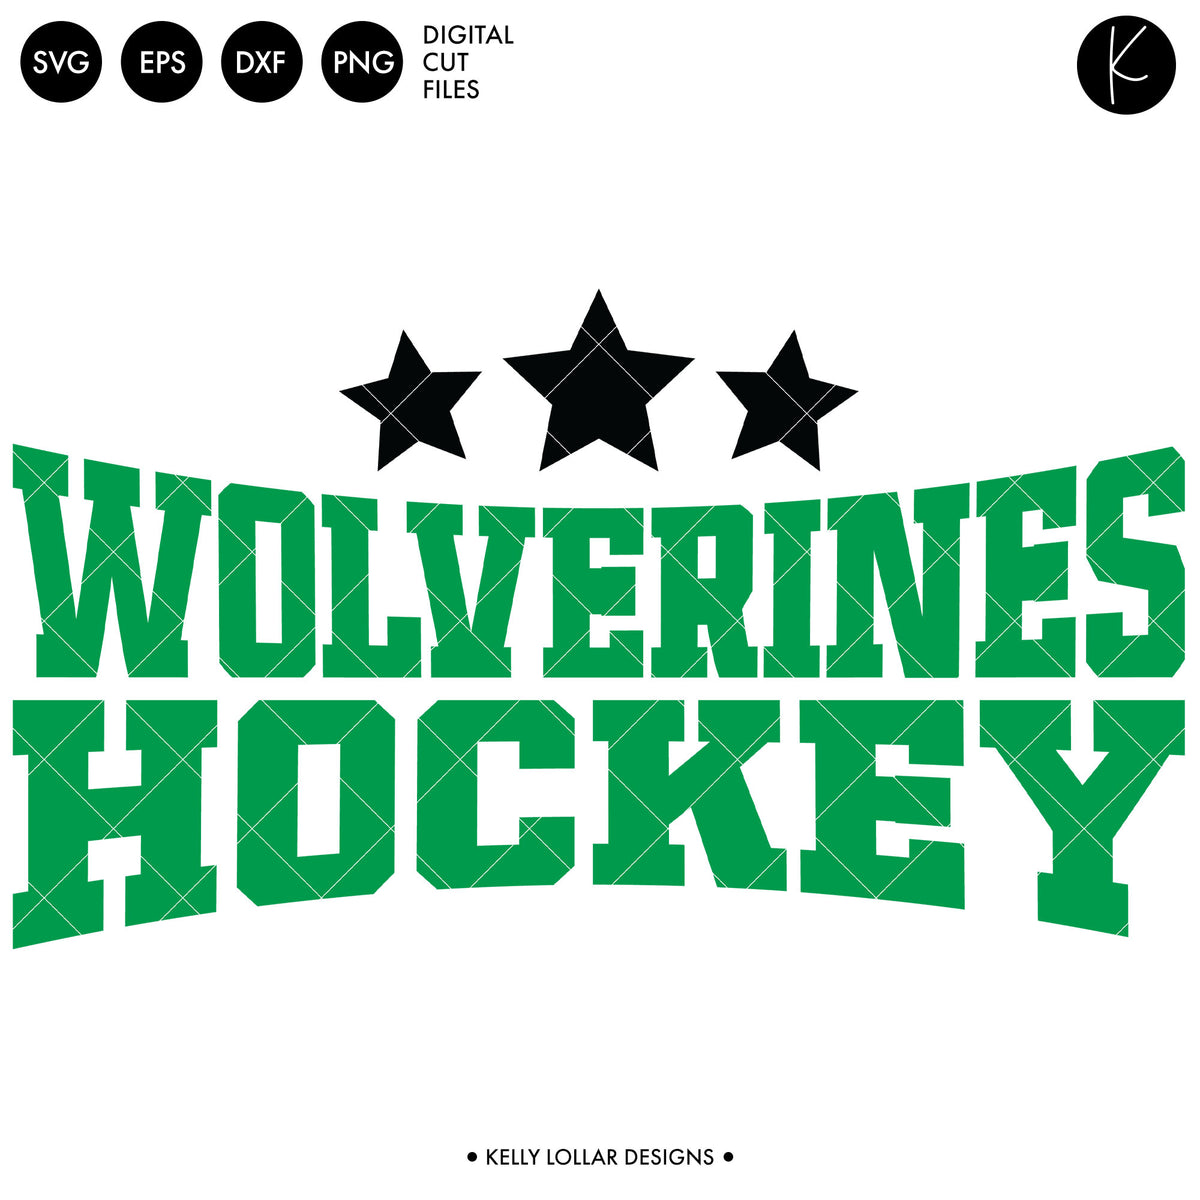 Wolverines Hockey Bundle | SVG DXF EPS PNG Cut Files